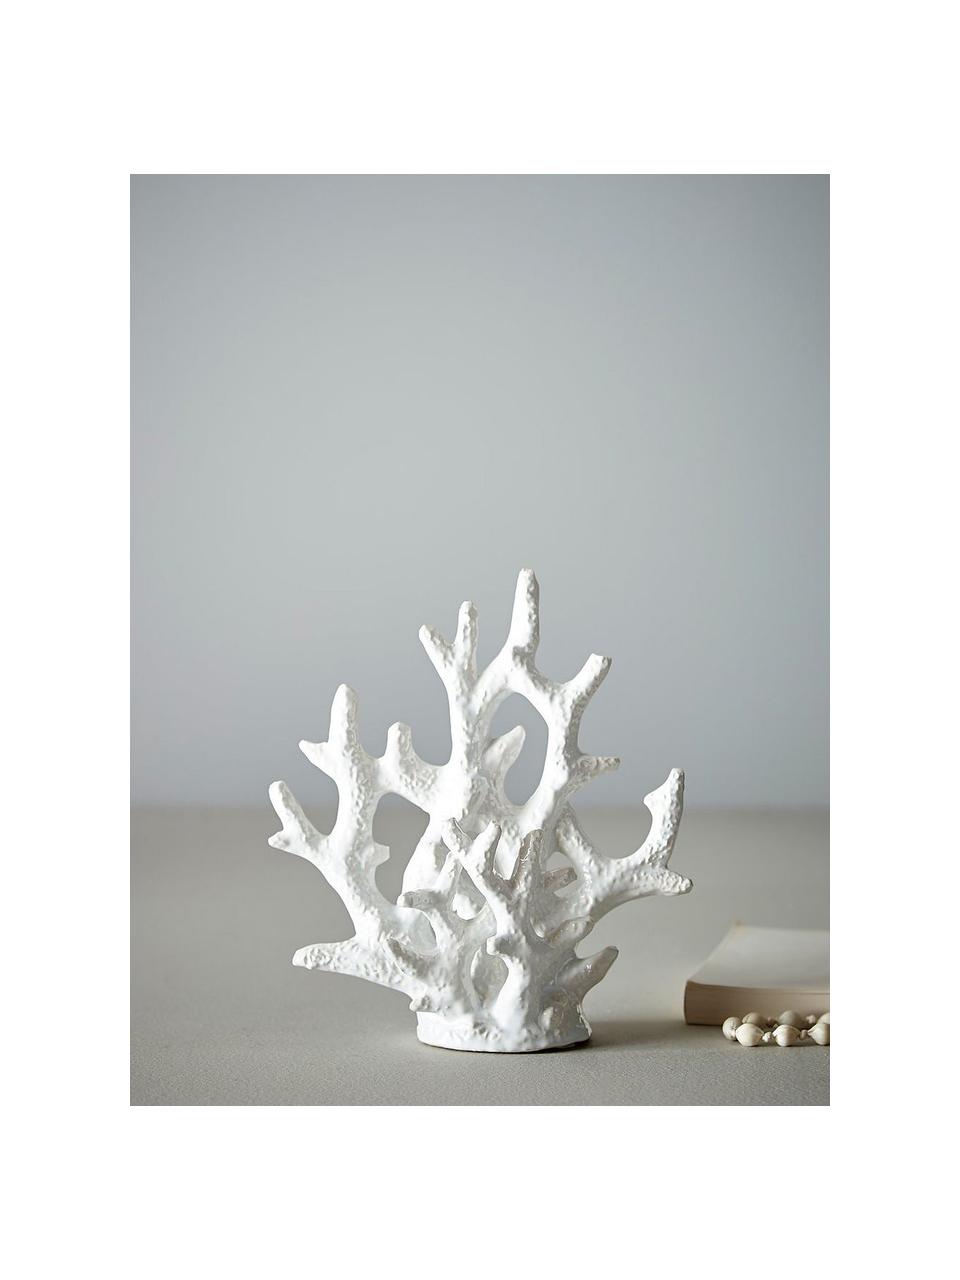 Handgefertigtes Deko-Objekt Corallo, Keramik, glasiert, Weiß, 21 x 22 cm